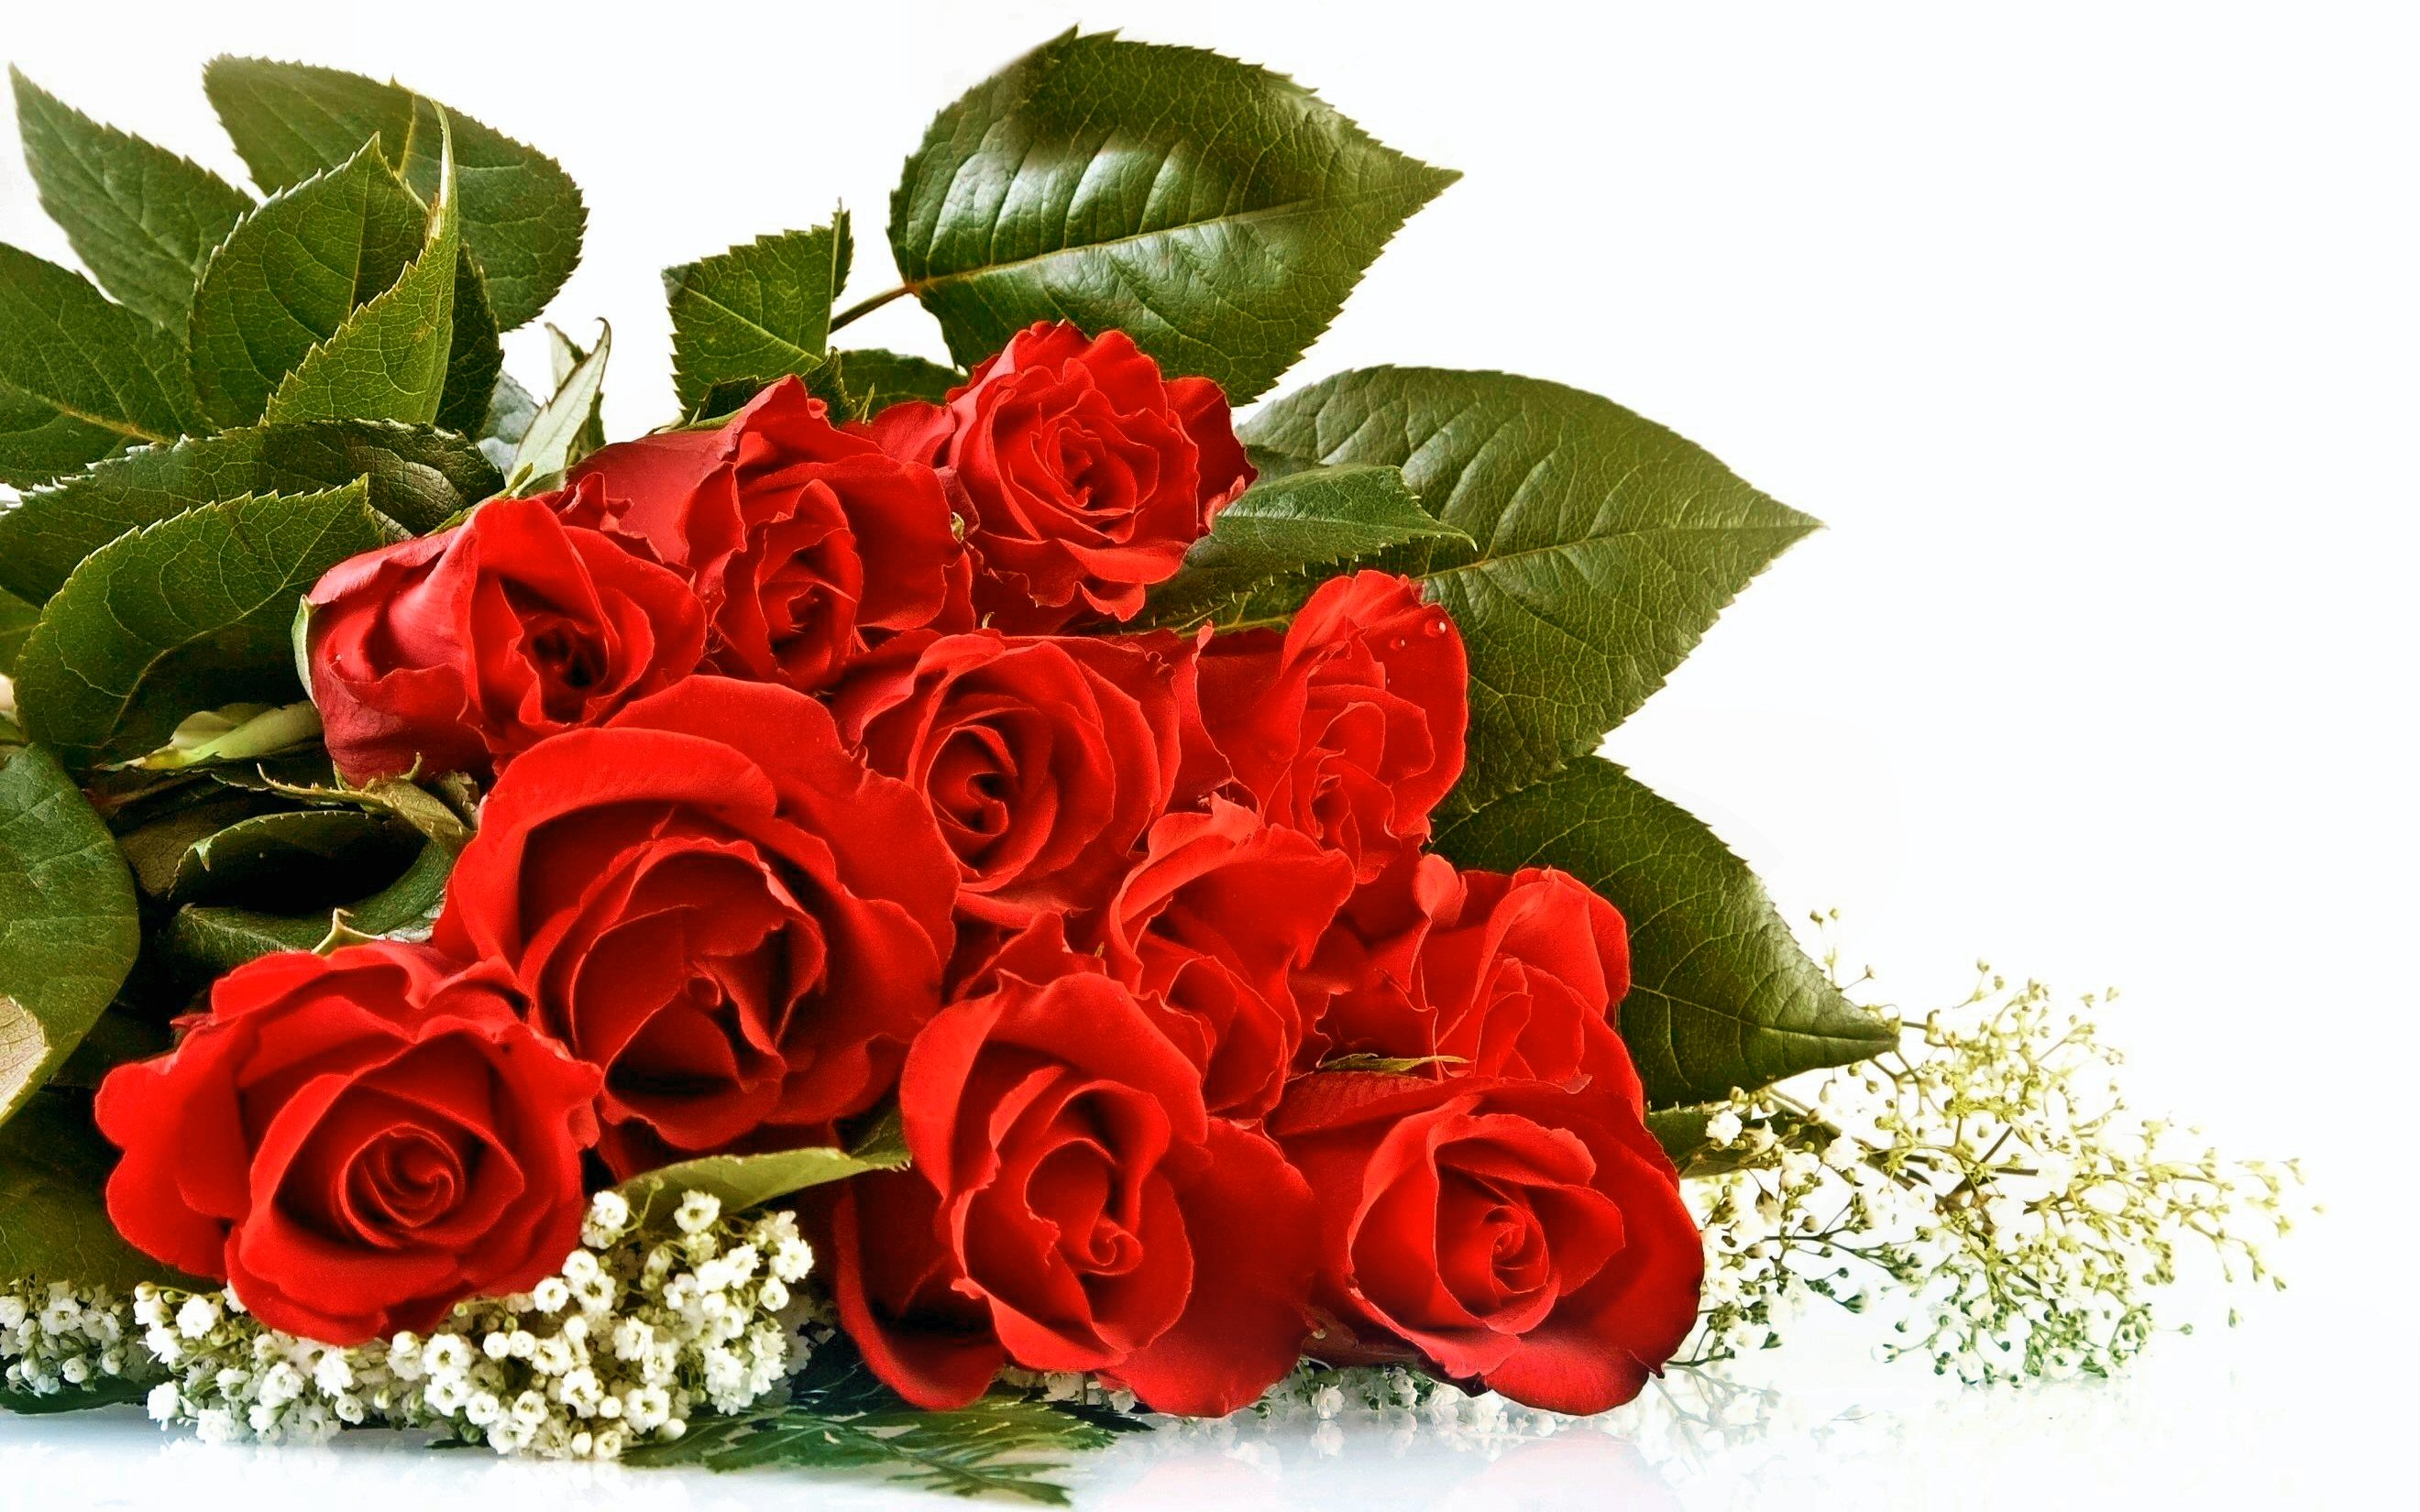 351026 descargar imagen rosa, ramo, tierra/naturaleza, flor, hoja, flor roja, rosa roja, día de san valentín, flores: fondos de pantalla y protectores de pantalla gratis